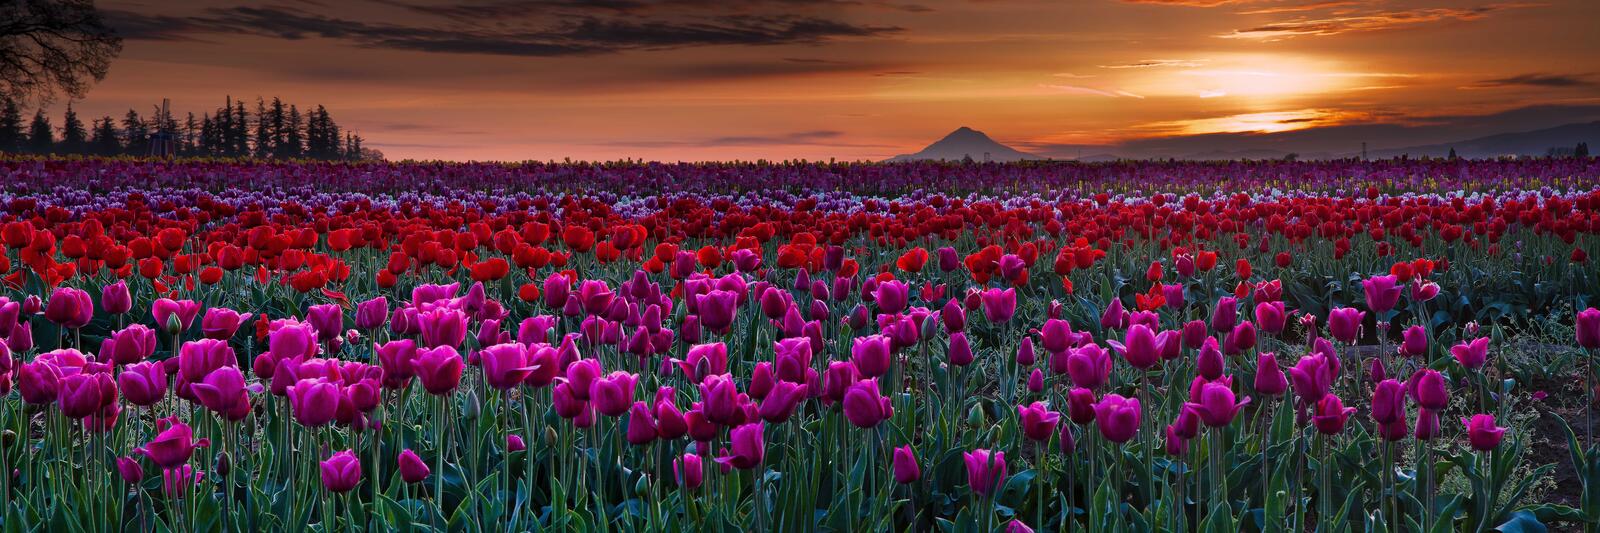 Wallpapers field of tulips sunset field on the desktop